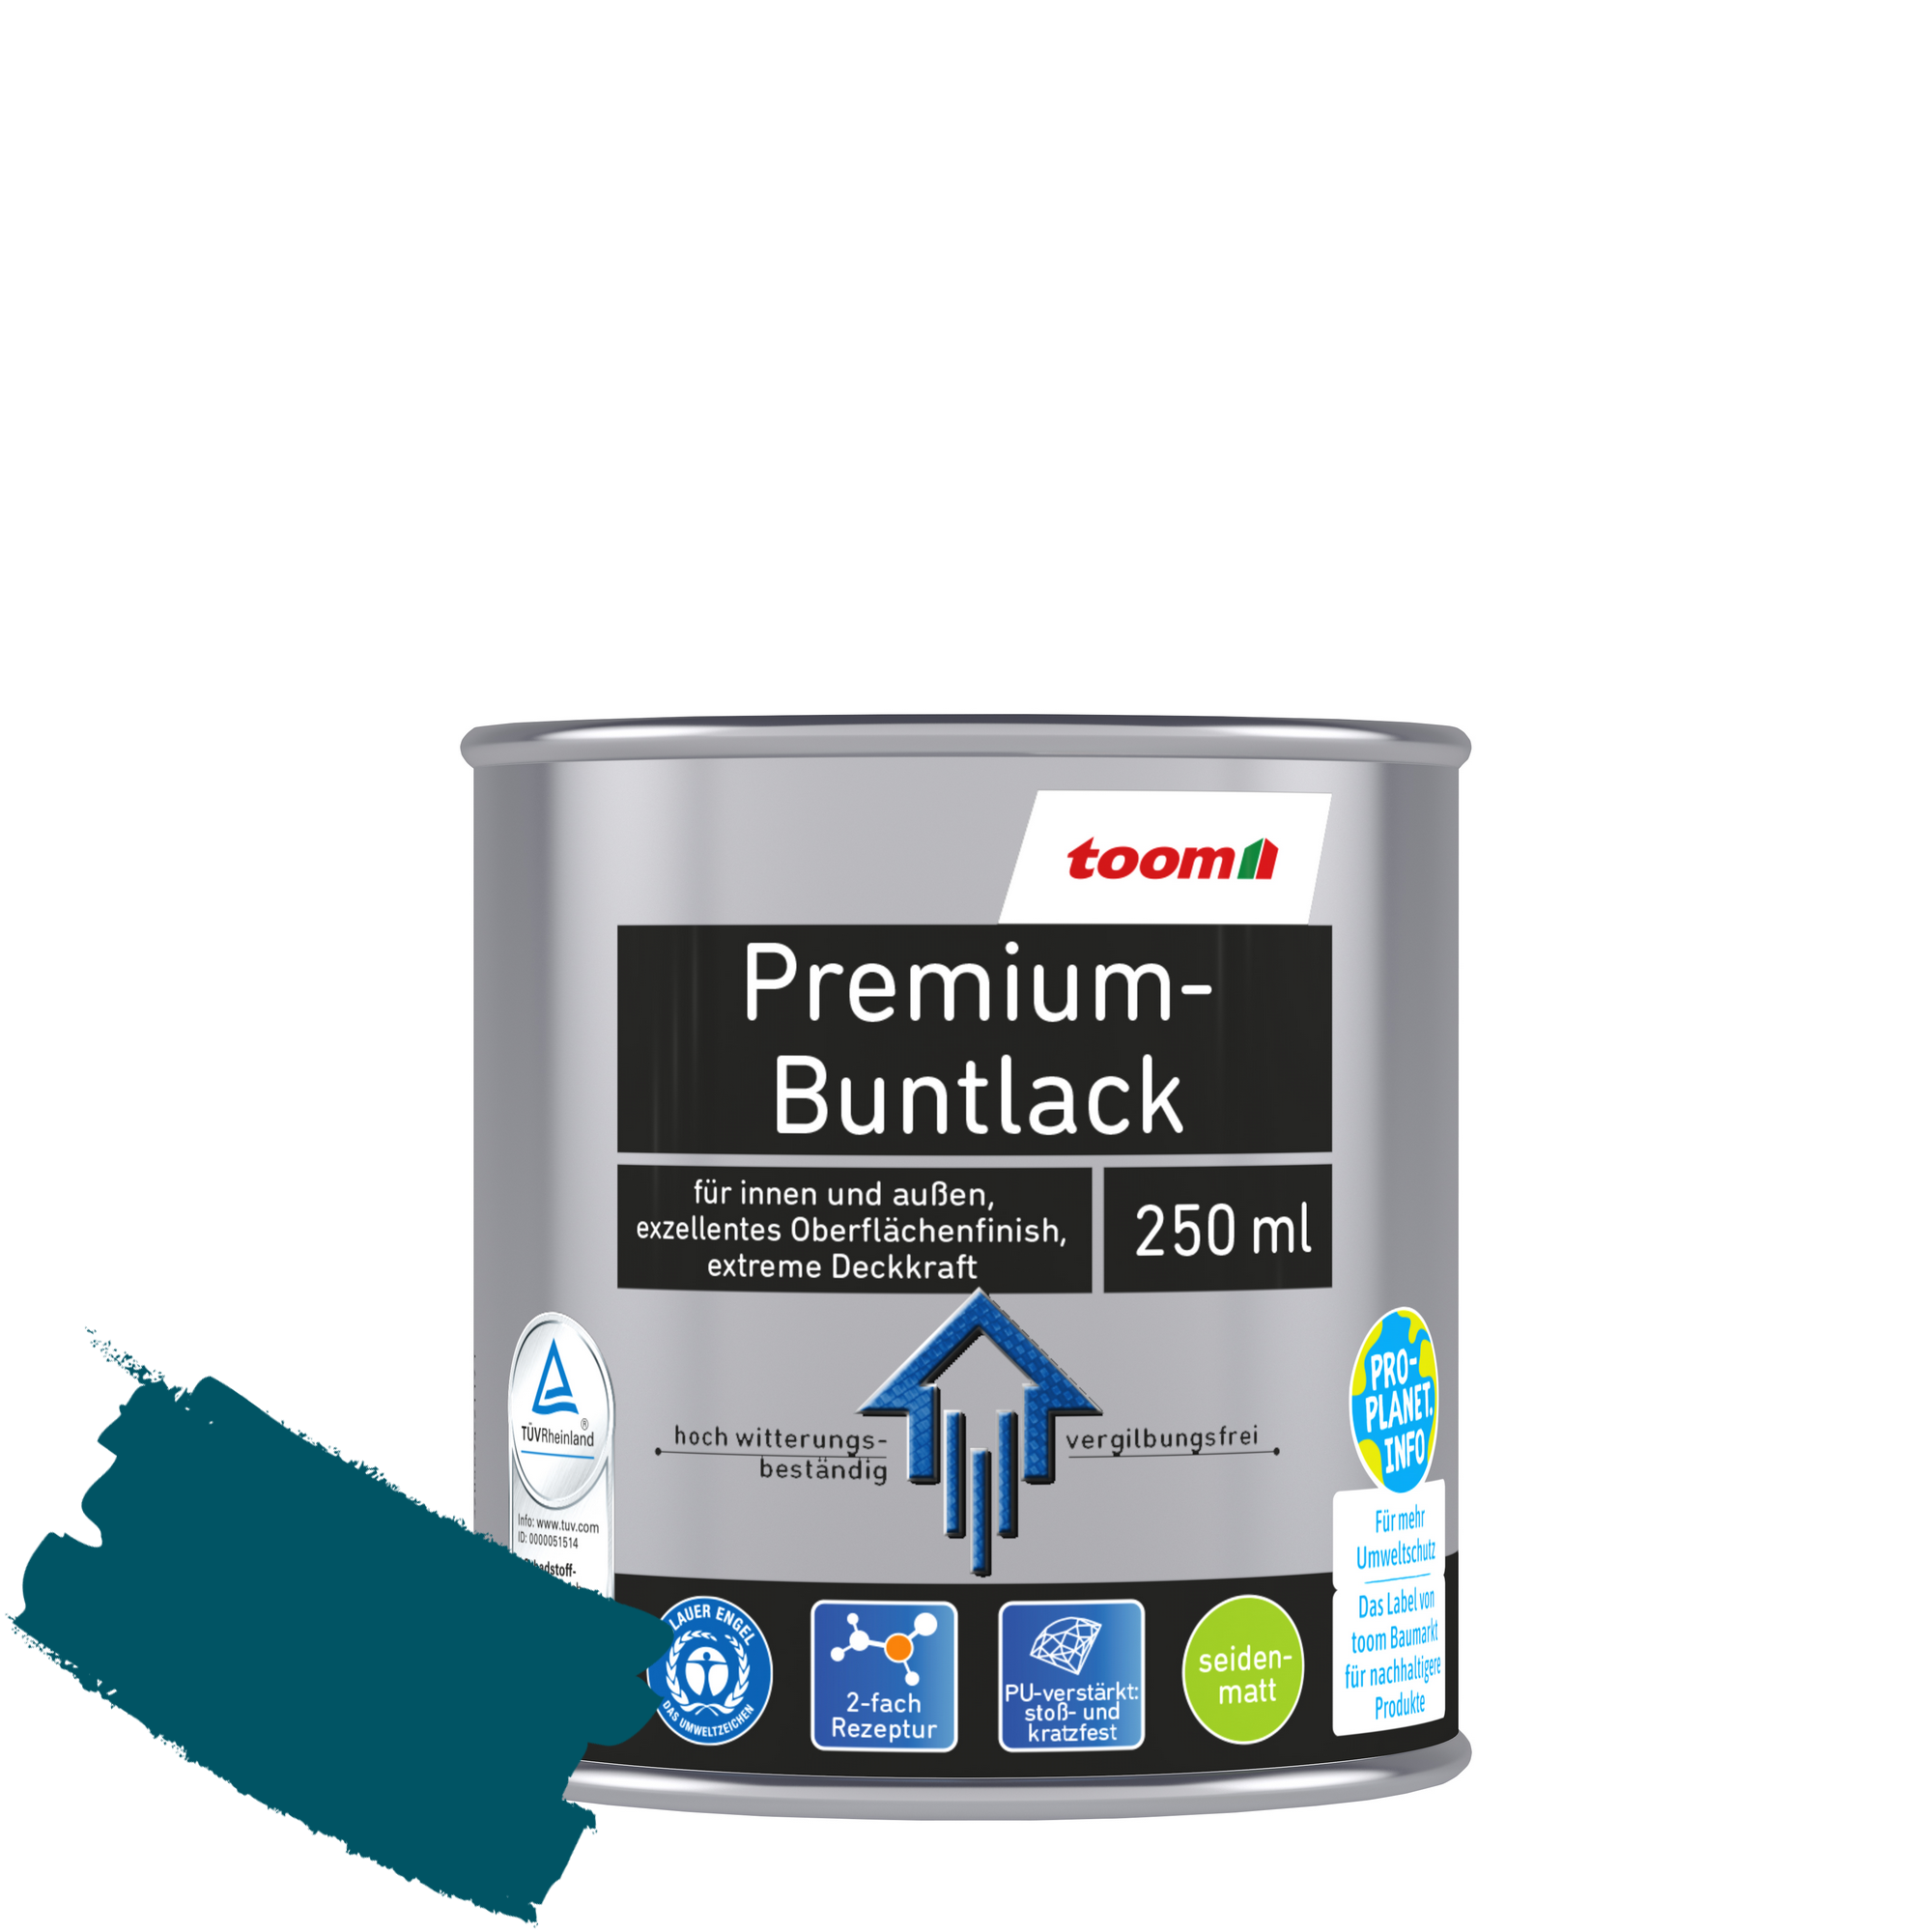 Premium-Buntlack petrolfarben seidenmatt 250 ml + product picture